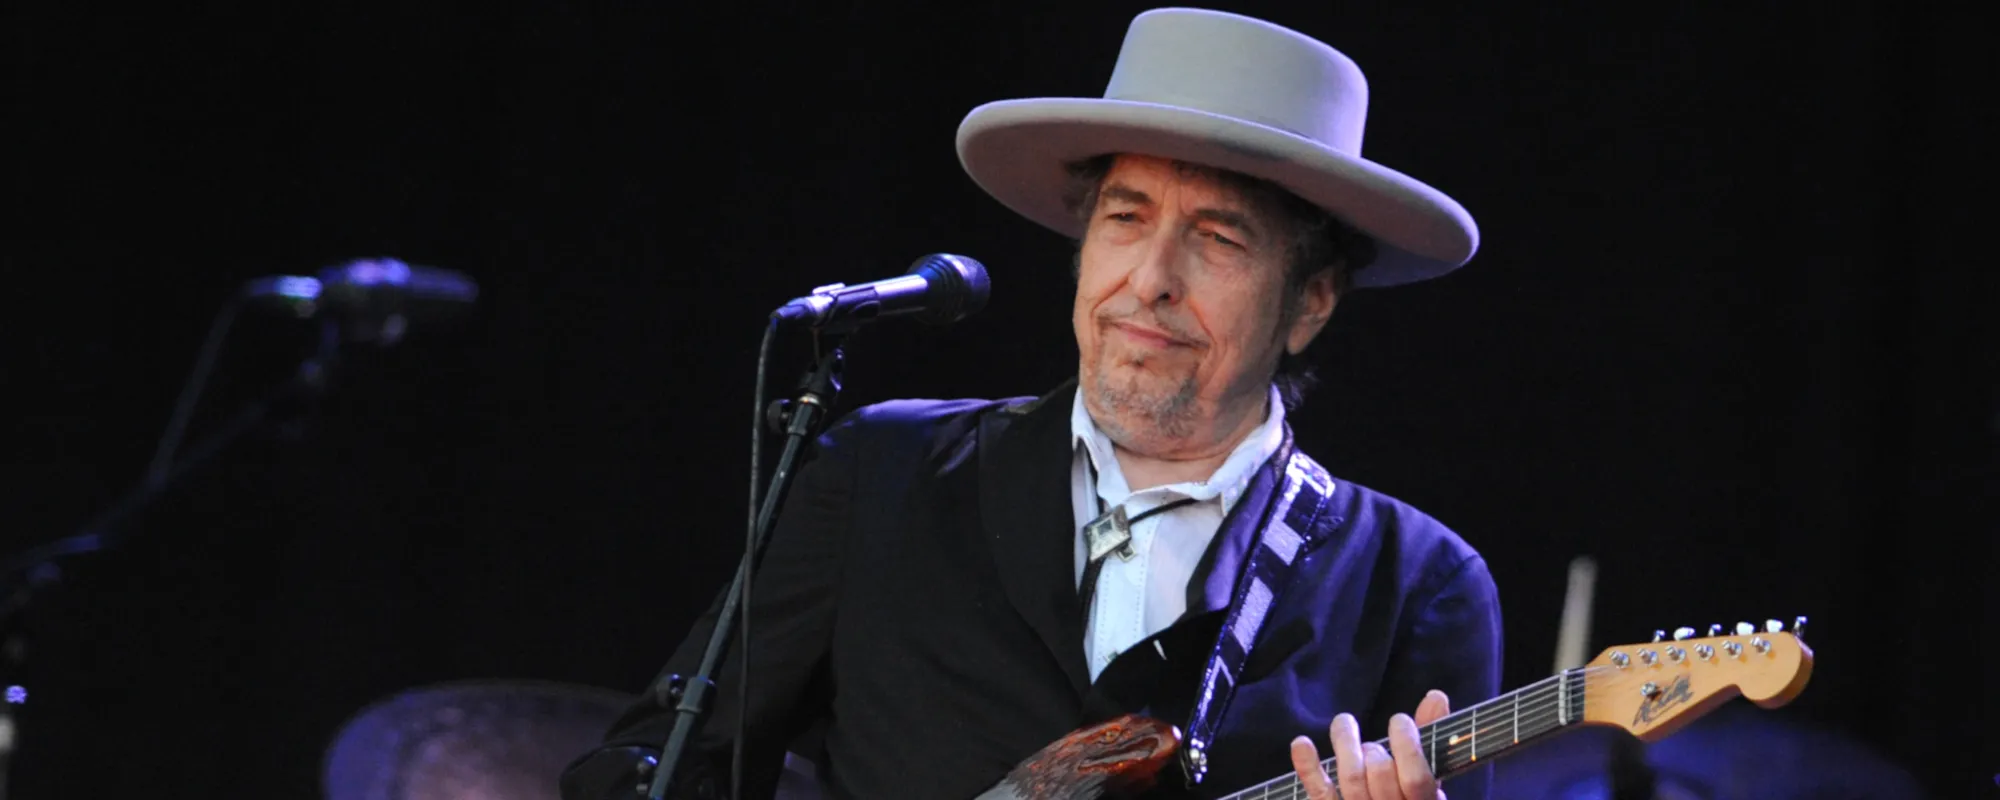 Bob Dylan Pays Tribute to “Lifelong Friend” Robbie Robertson